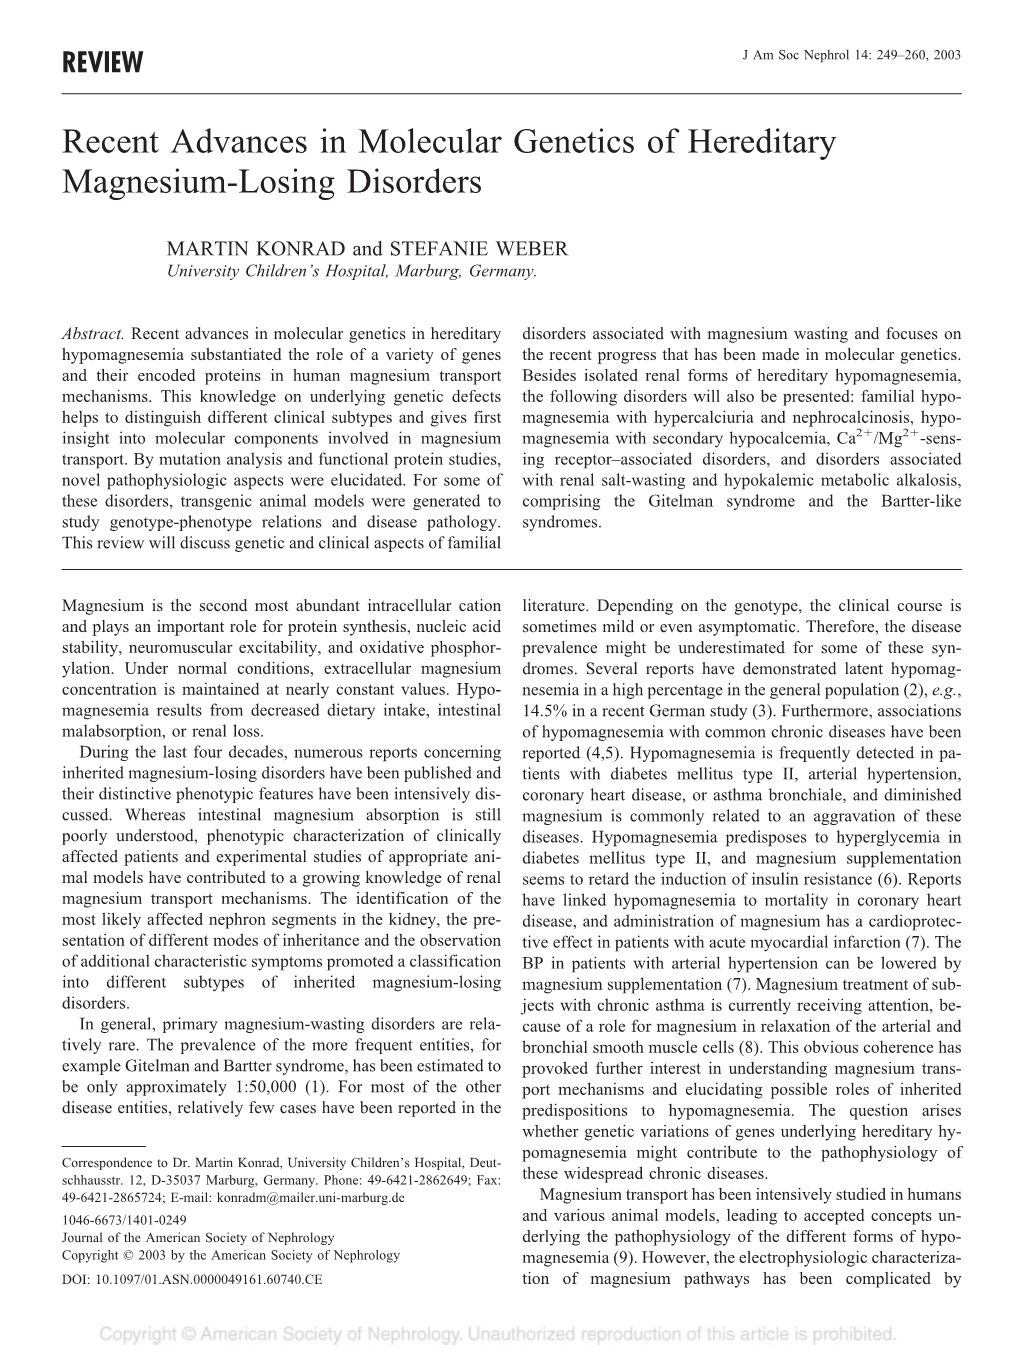 Recent Advances in Molecular Genetics of Hereditary Magnesium-Losing Disorders